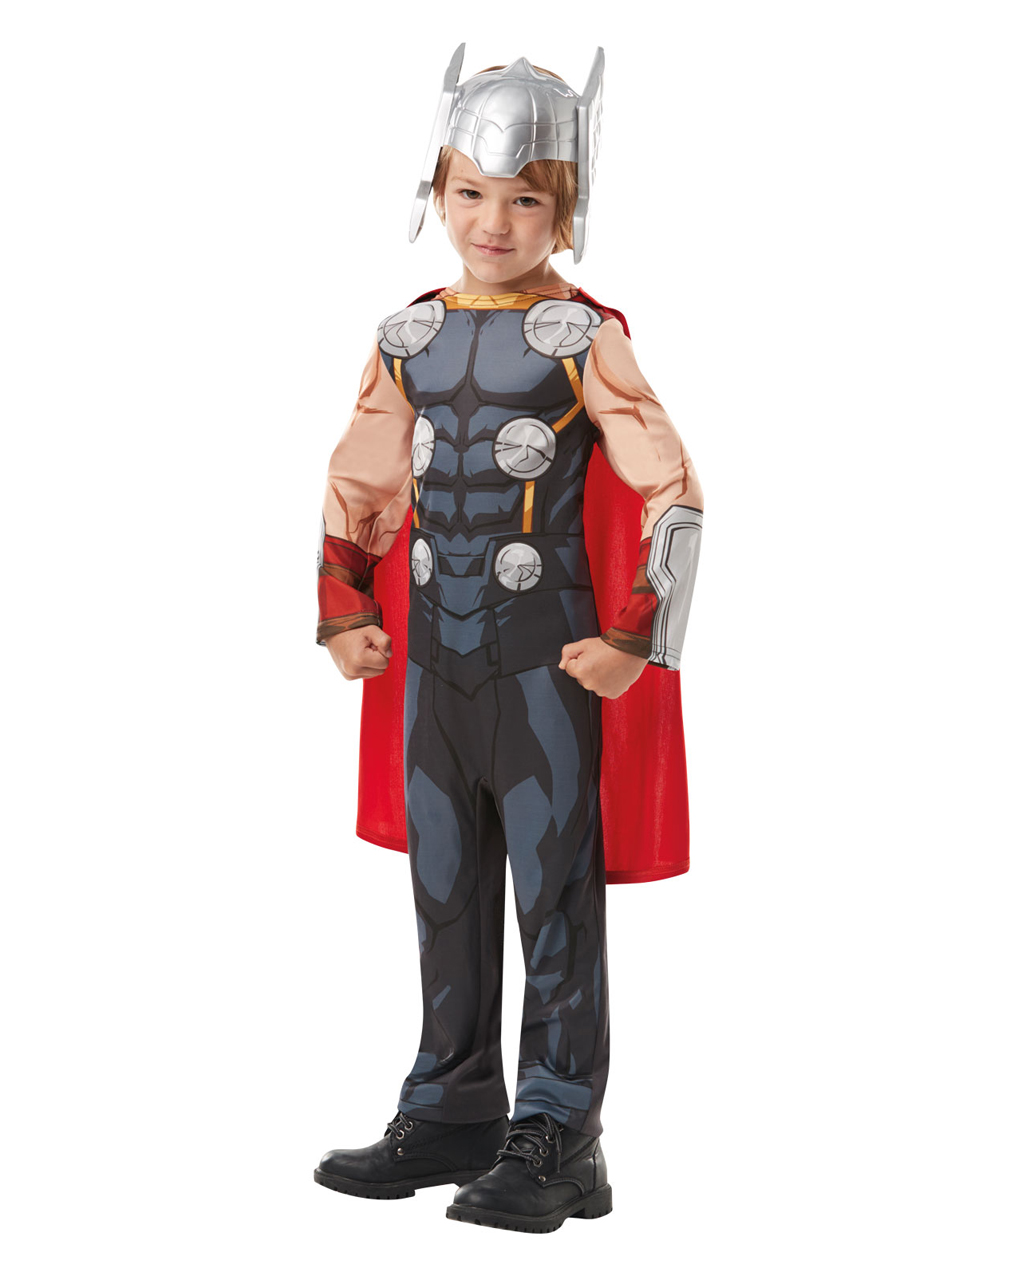 Thor Kinderkostüm, Avengers Kostüm für Kinder